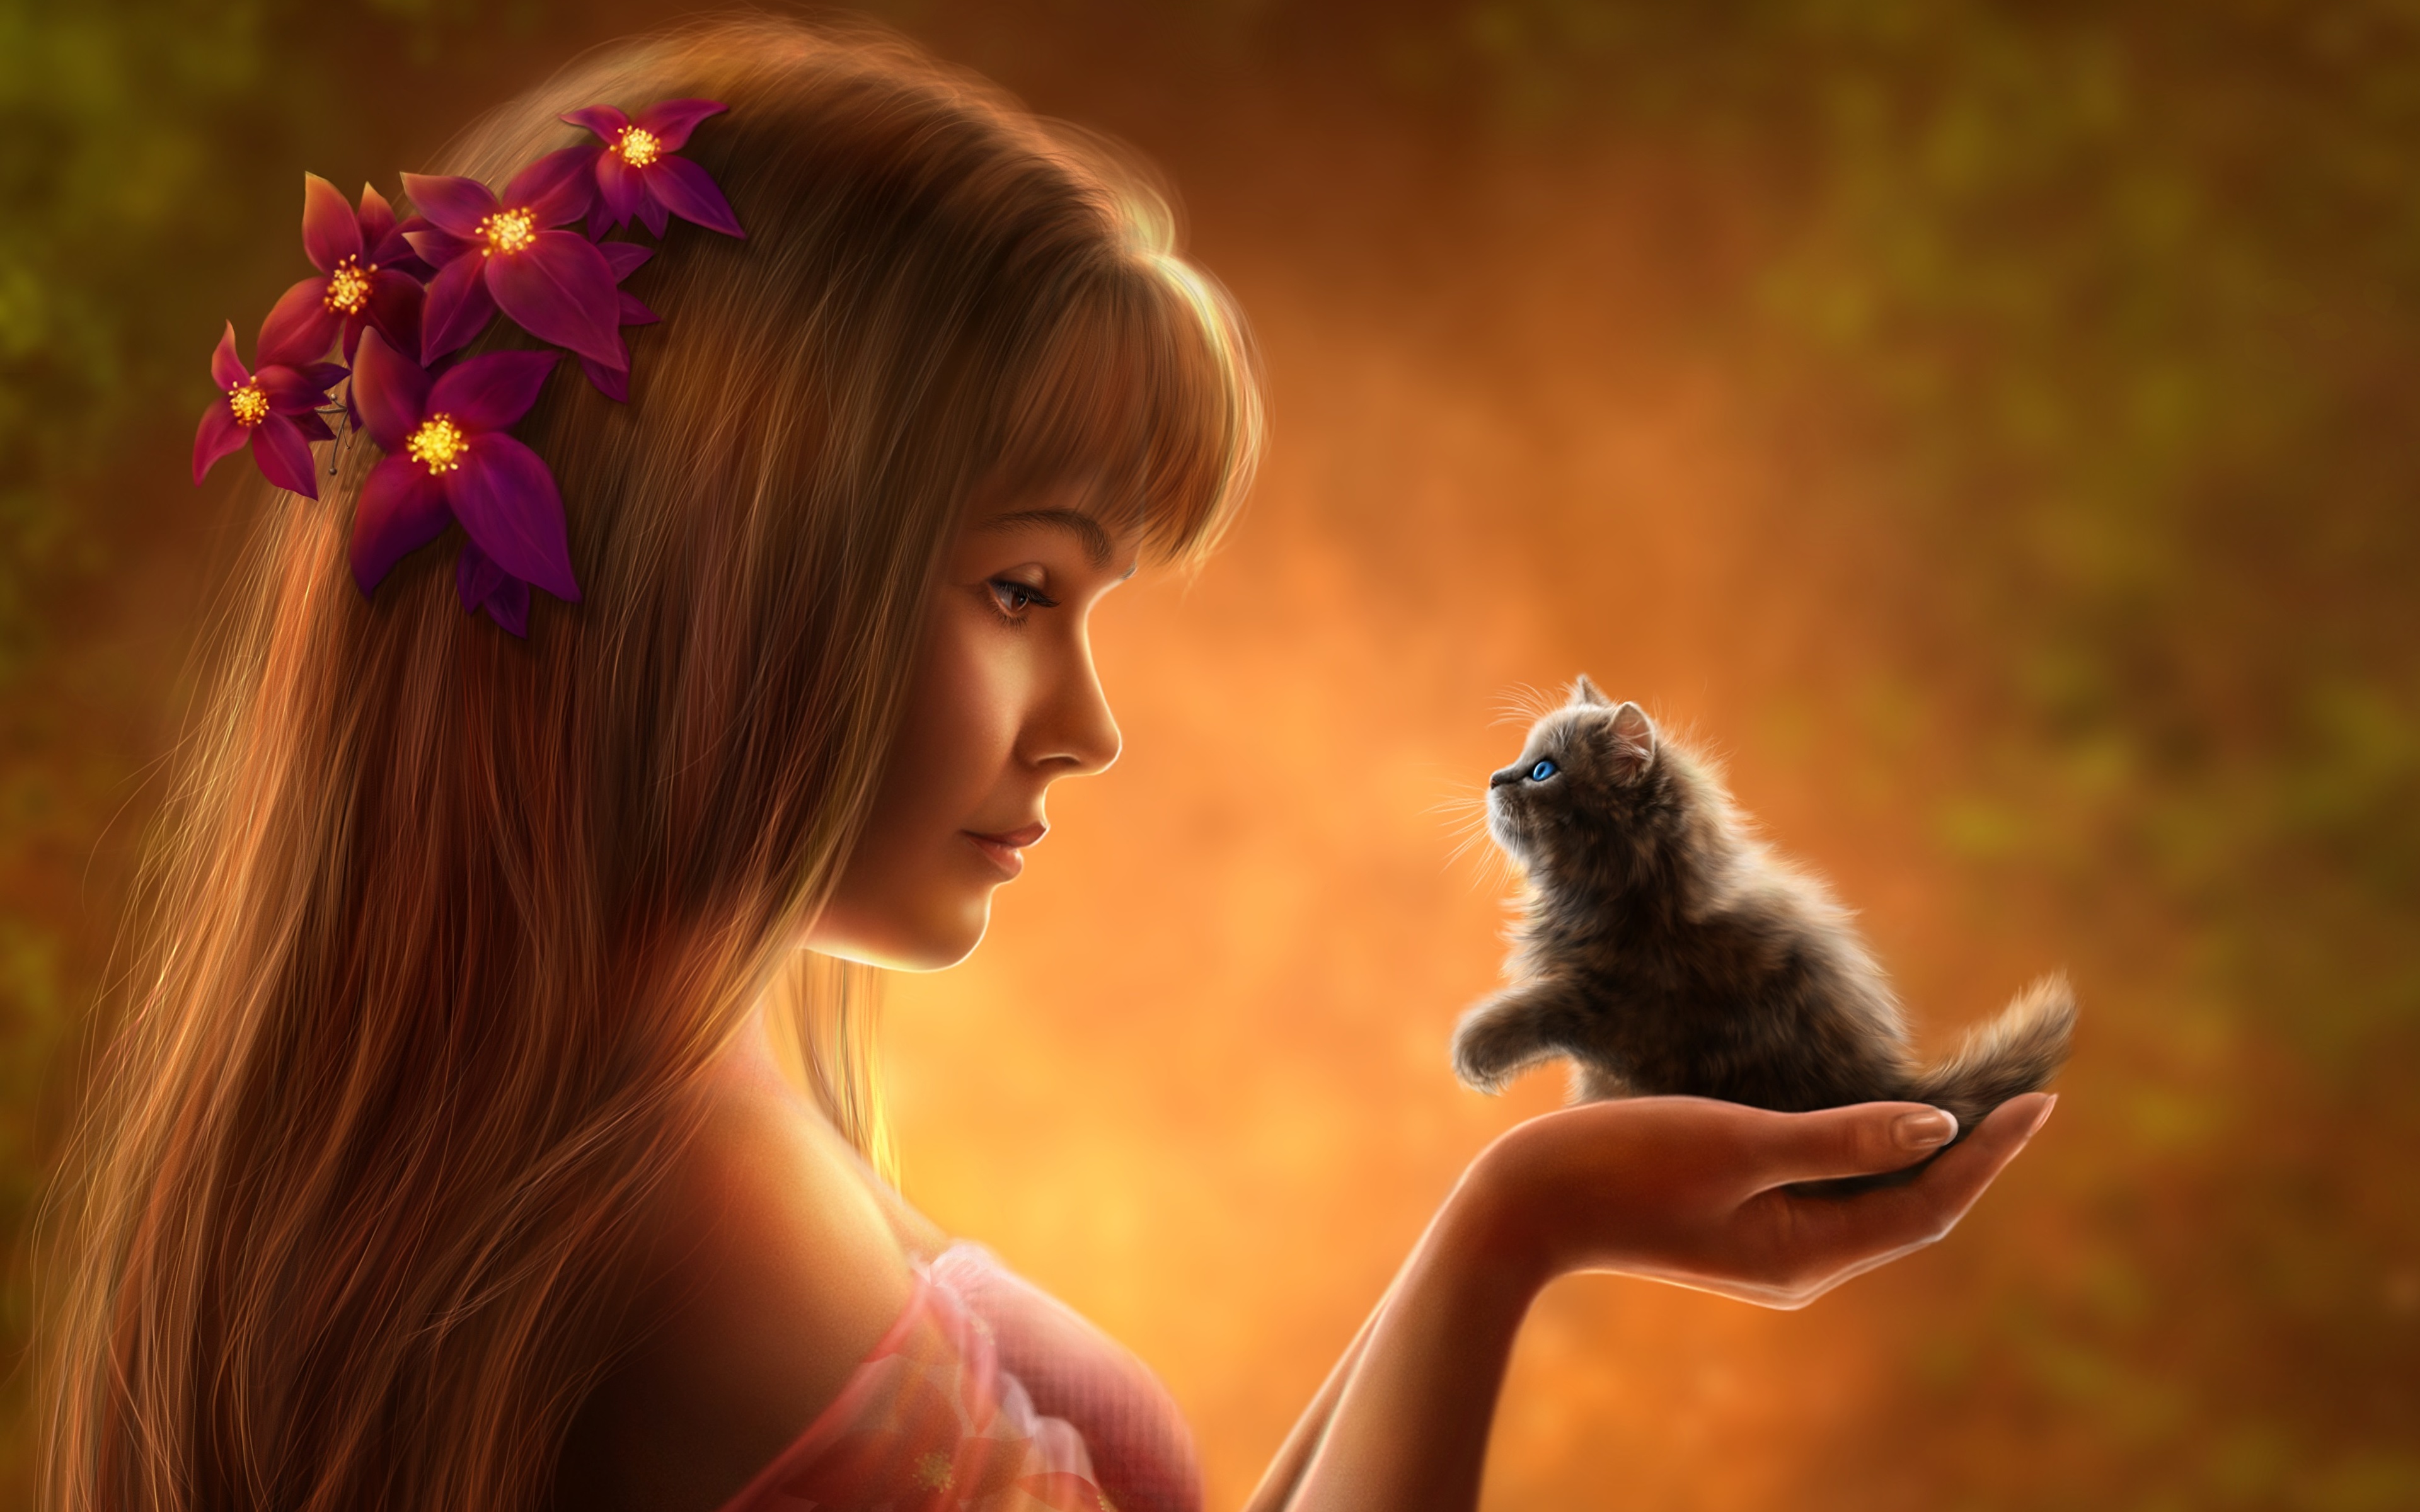 Картинка девушка с кошкой. Девушка с котенком. Девушка и кот фэнтези. Девочка с котятами. Красивая девушка с котенком.